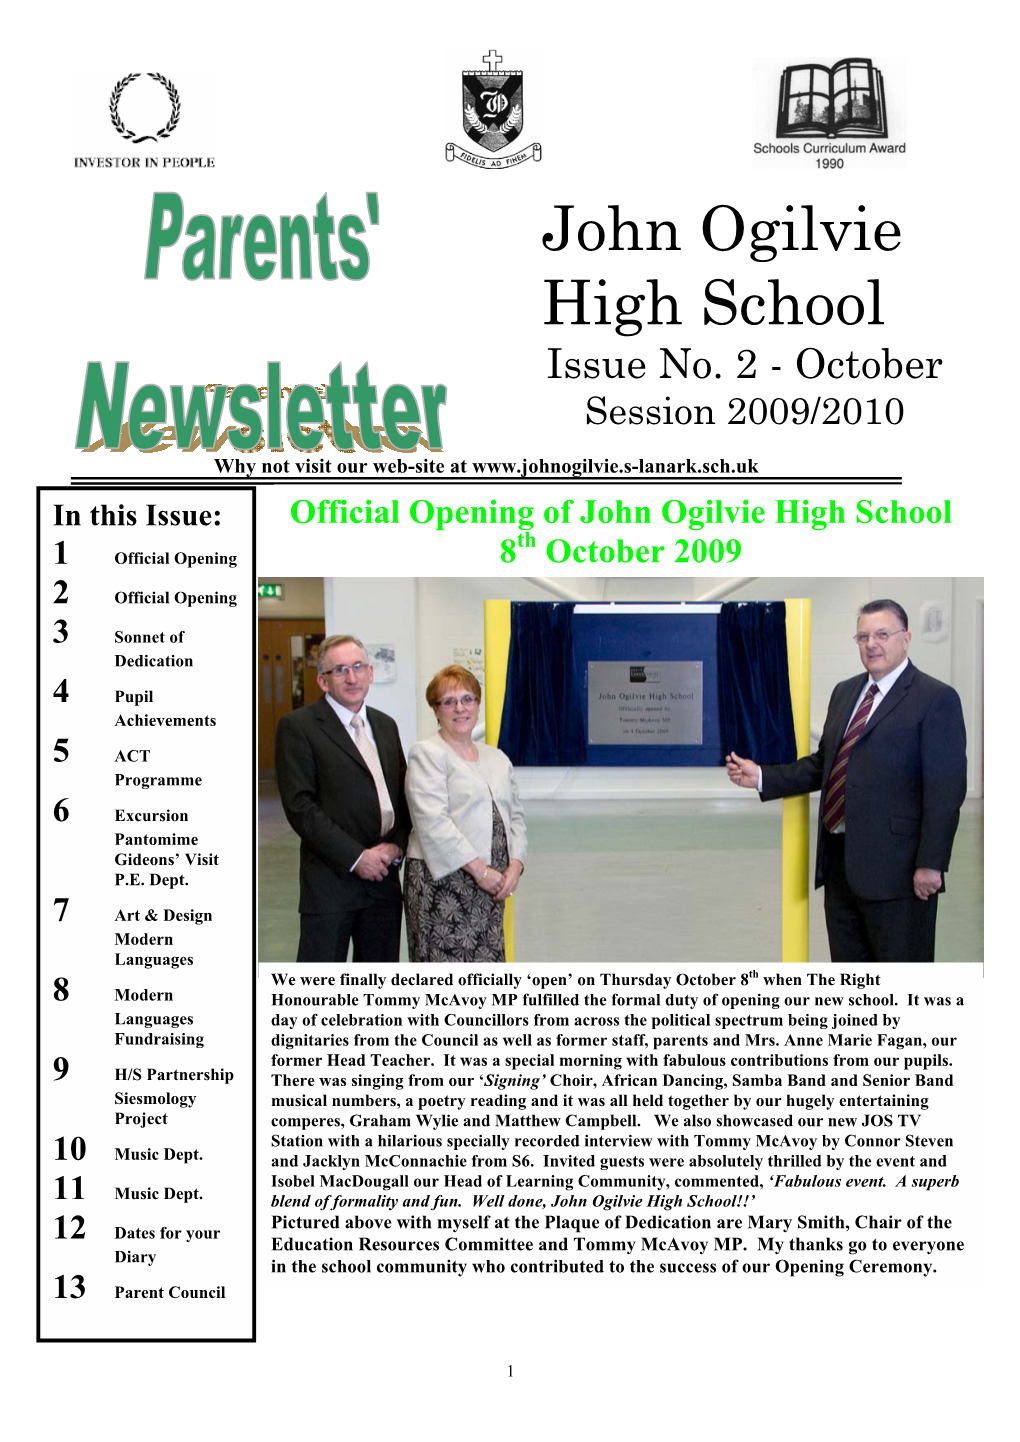 Official Opening of John Ogilvie High